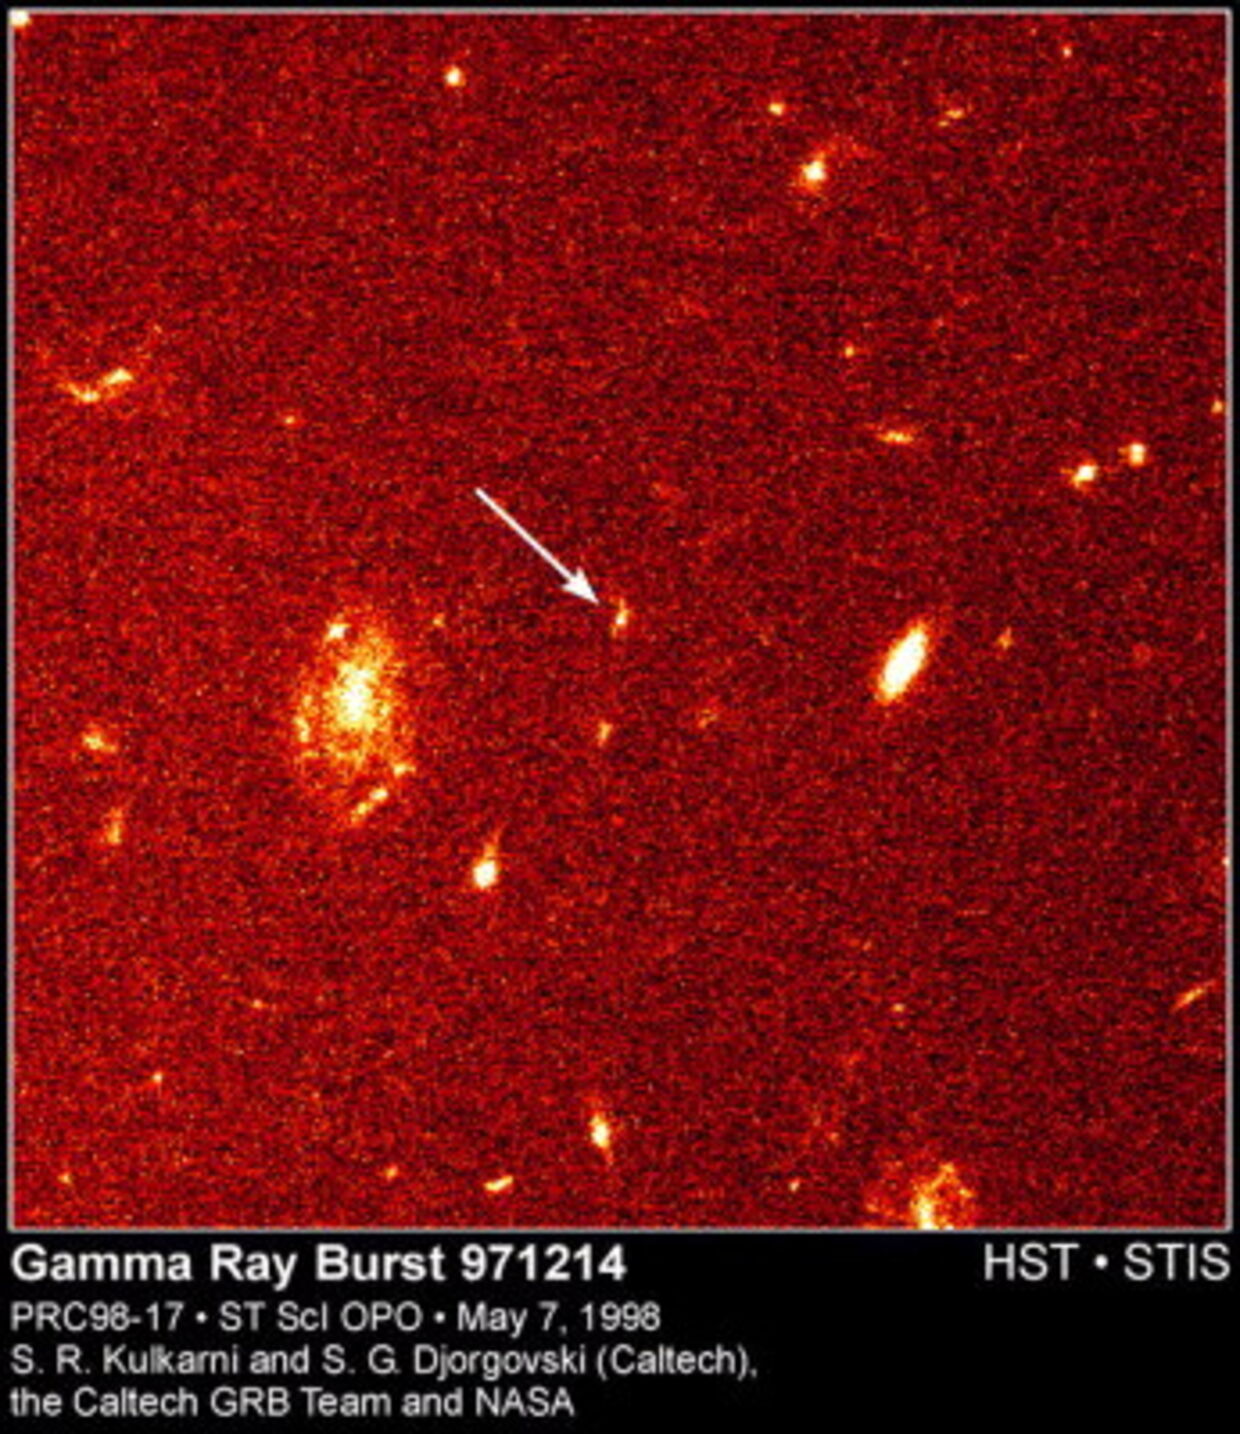 Her ses et gammaglimt - en voldsom energiudladning. Det tåler sammenligning med Big Bang.